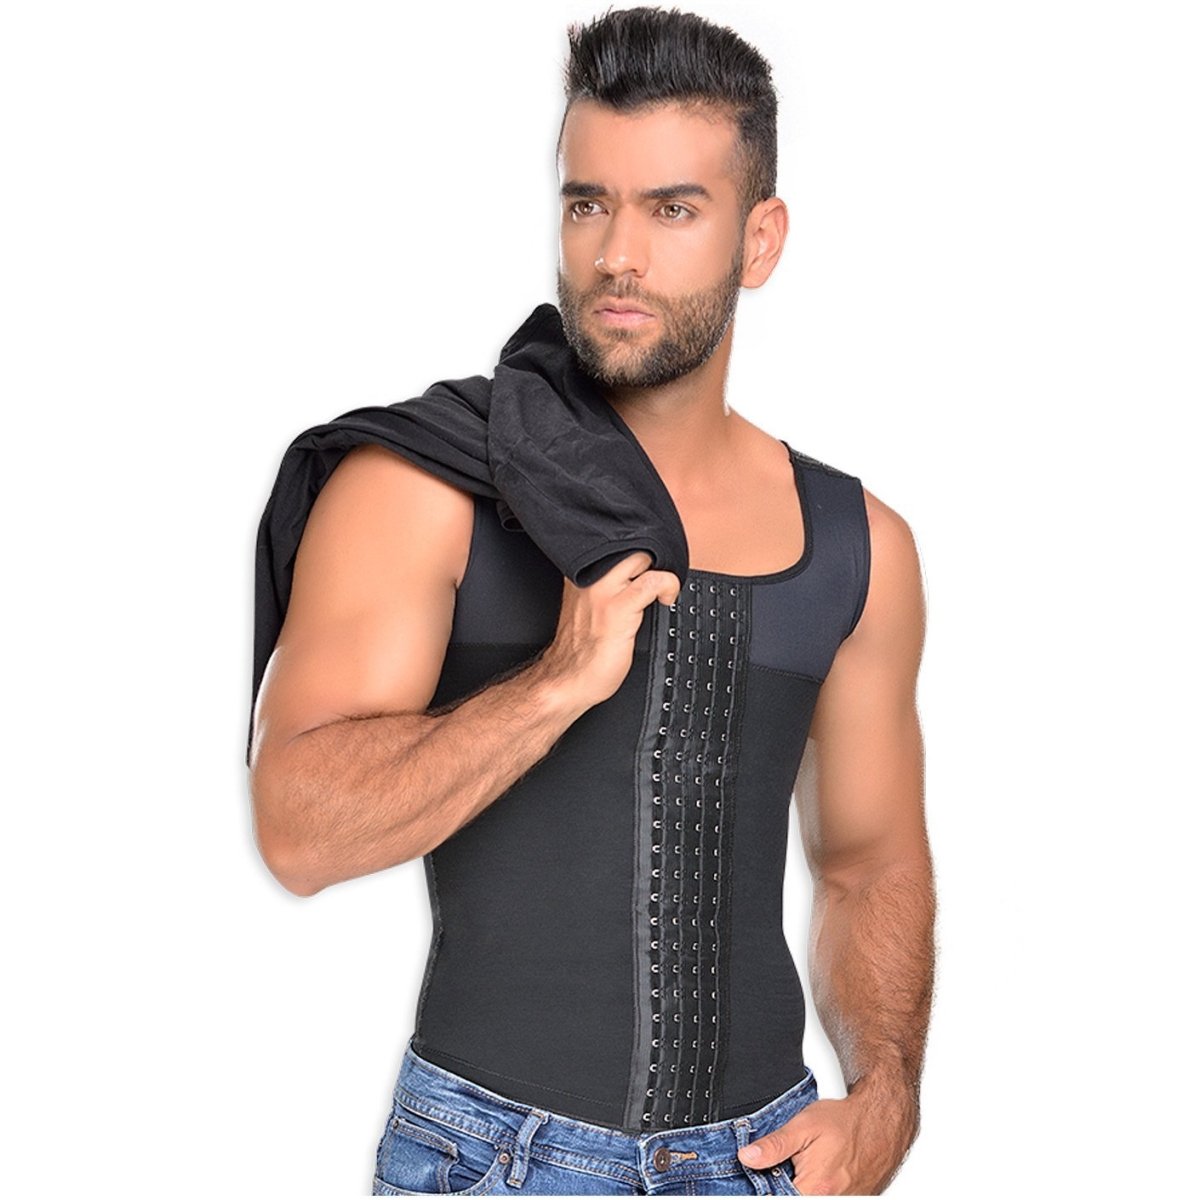 M&D 0060 Compression Vest Shirt Body Shaper for Men - Colombian Body Shaper